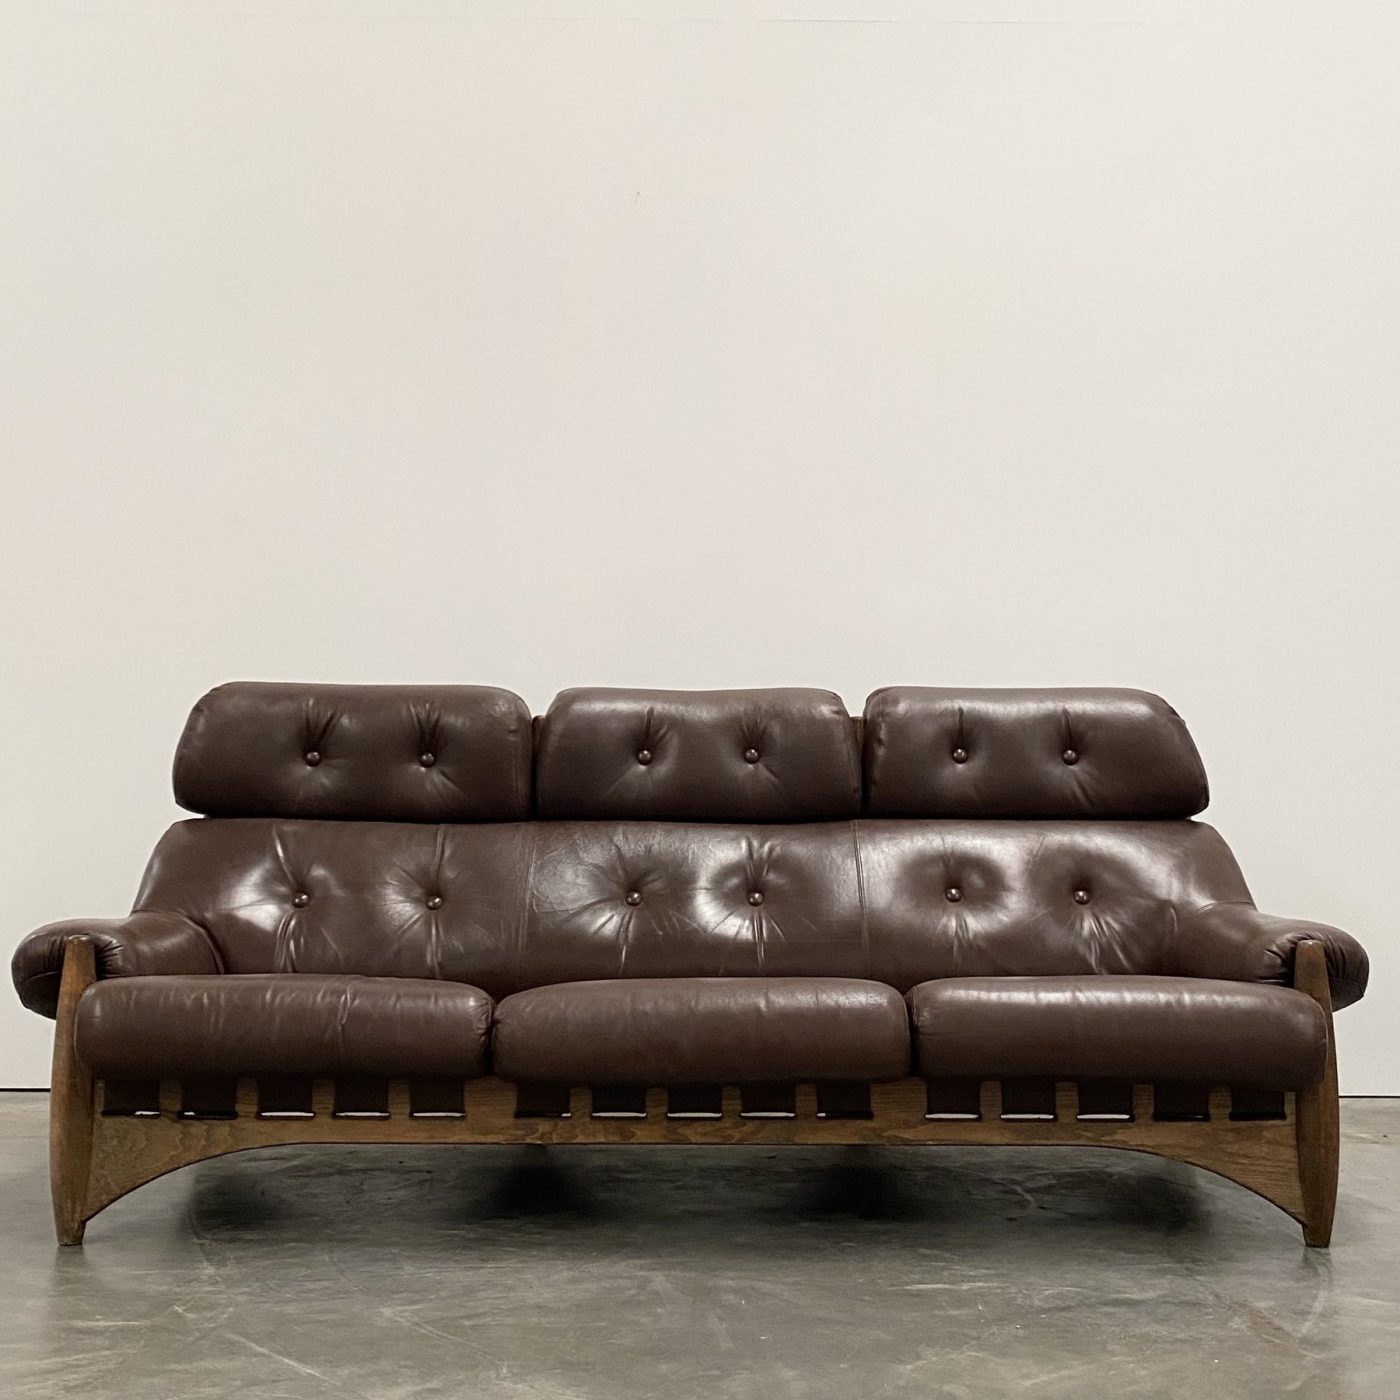 objet-vagabond-leather-sofa0002